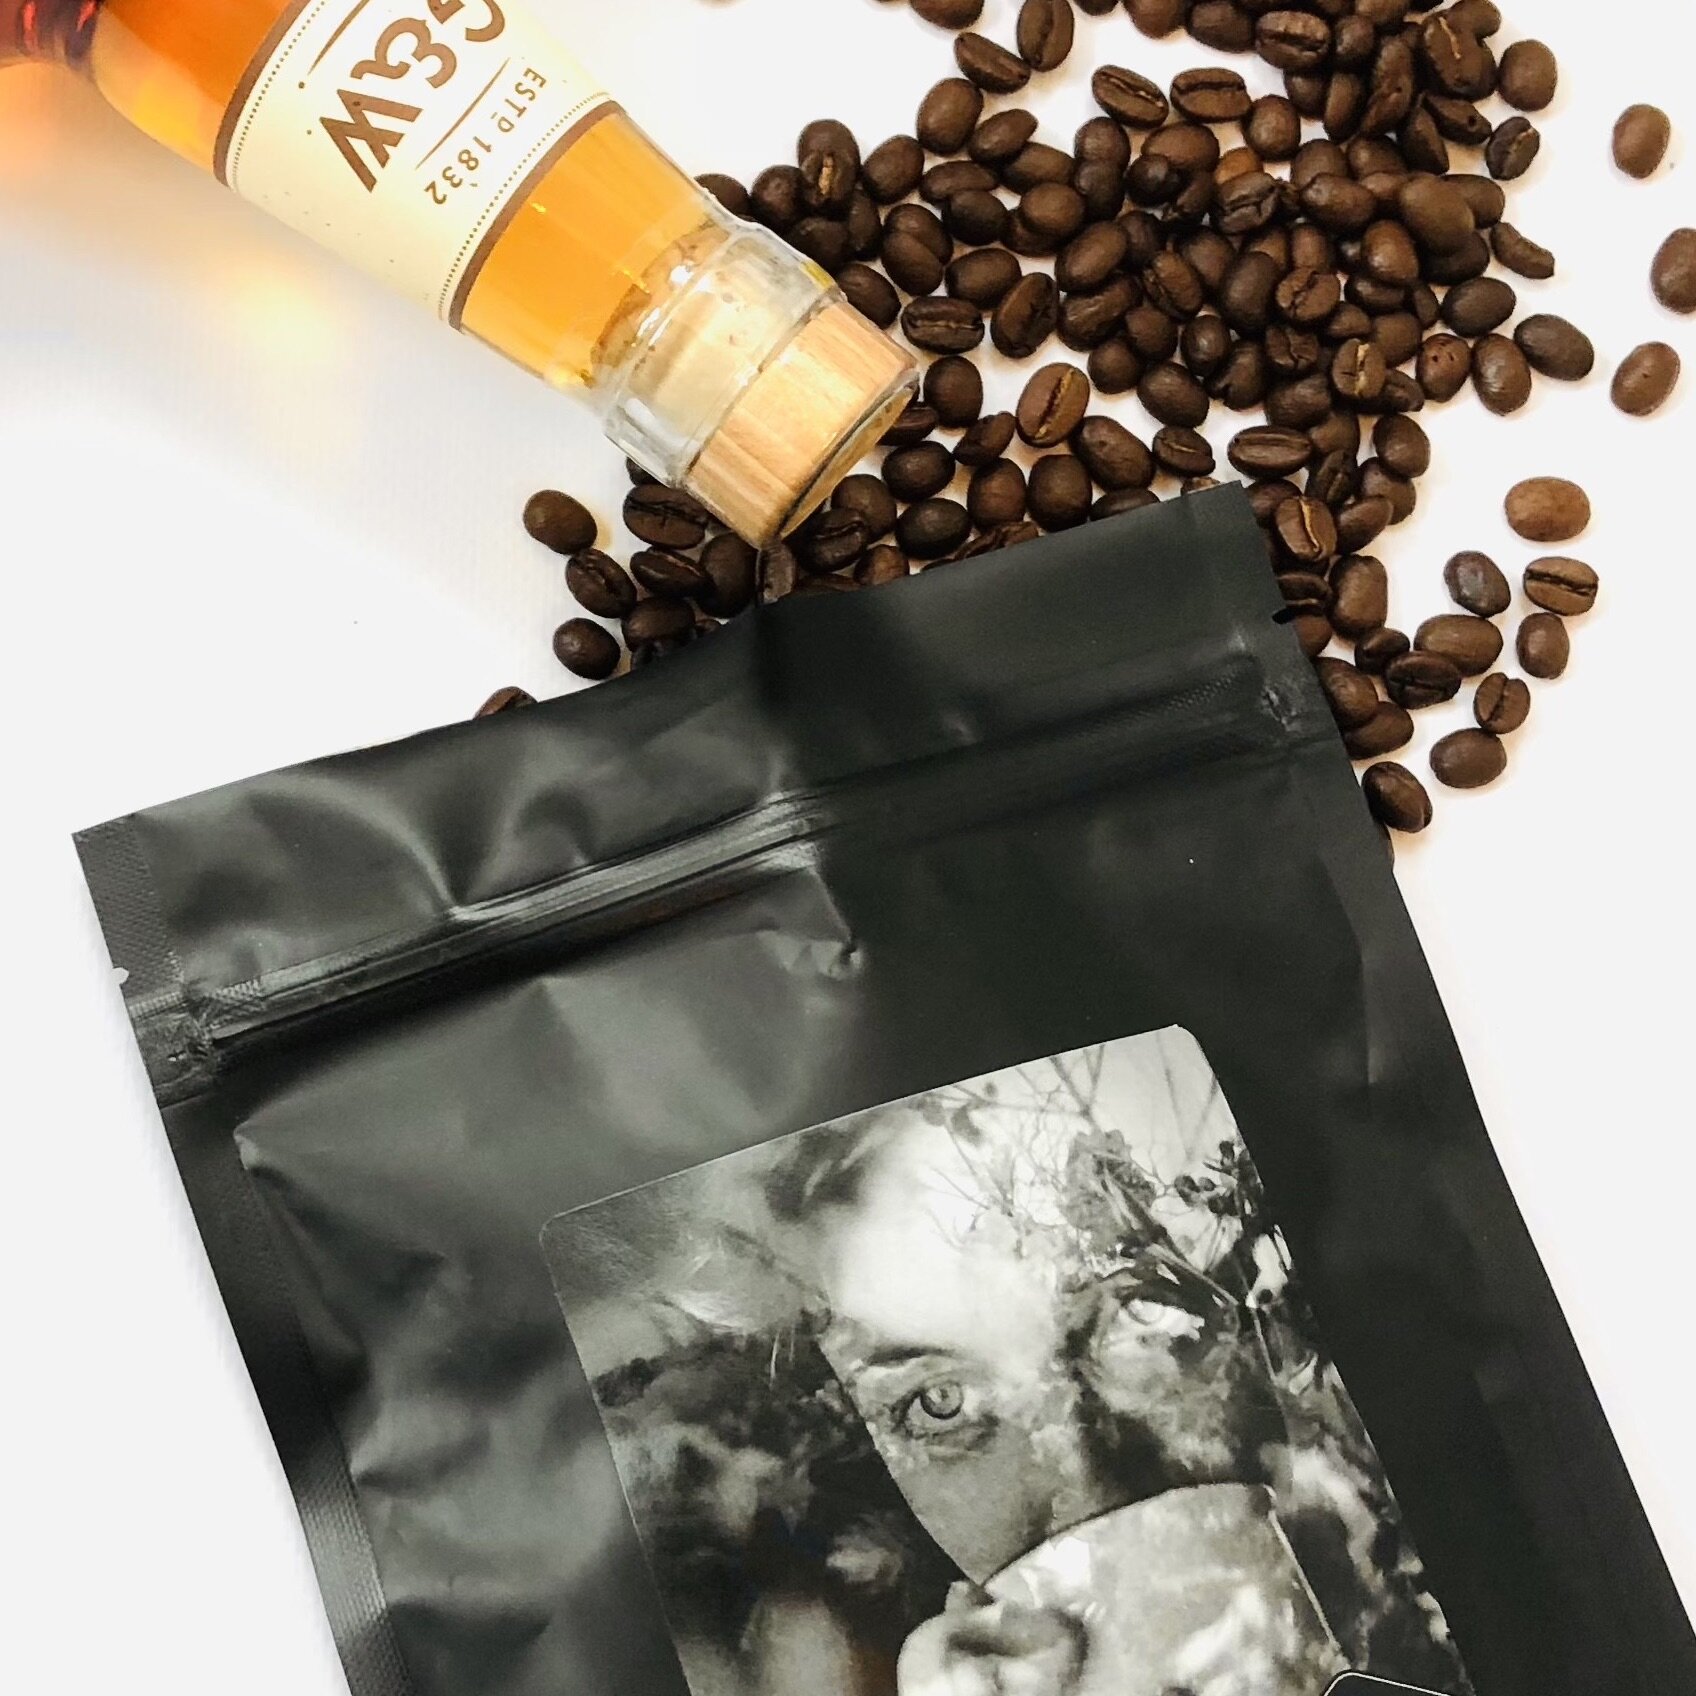 Focus-coffee+whisky-bottle-IMG_5772 small-sq-crop.jpg